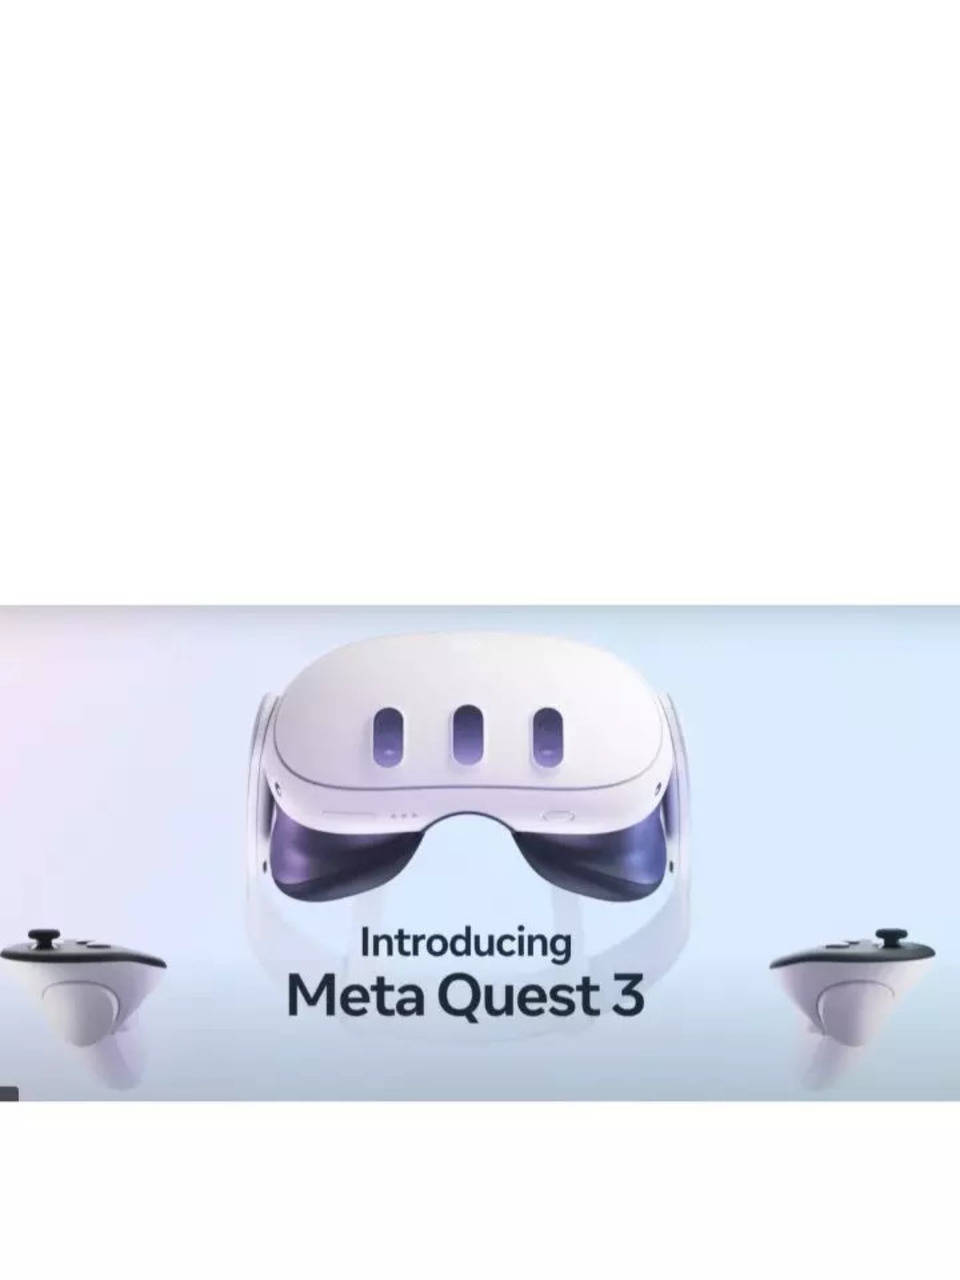 Meta Quest 3 Release Date, Price, Design, Features & Specs - Tech Advisor